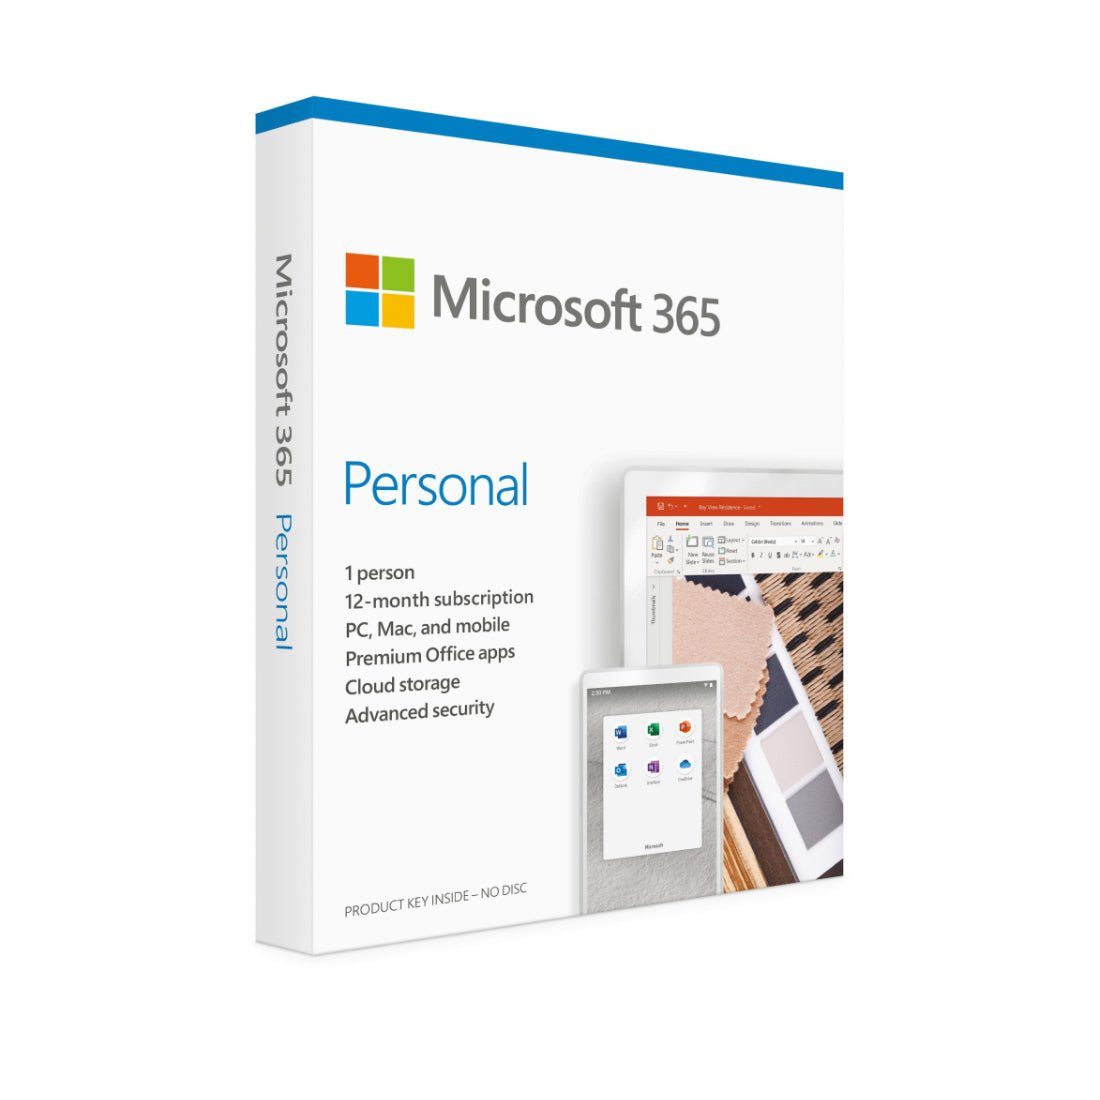 Microsoft 365 Personal - Store 974 | ستور ٩٧٤